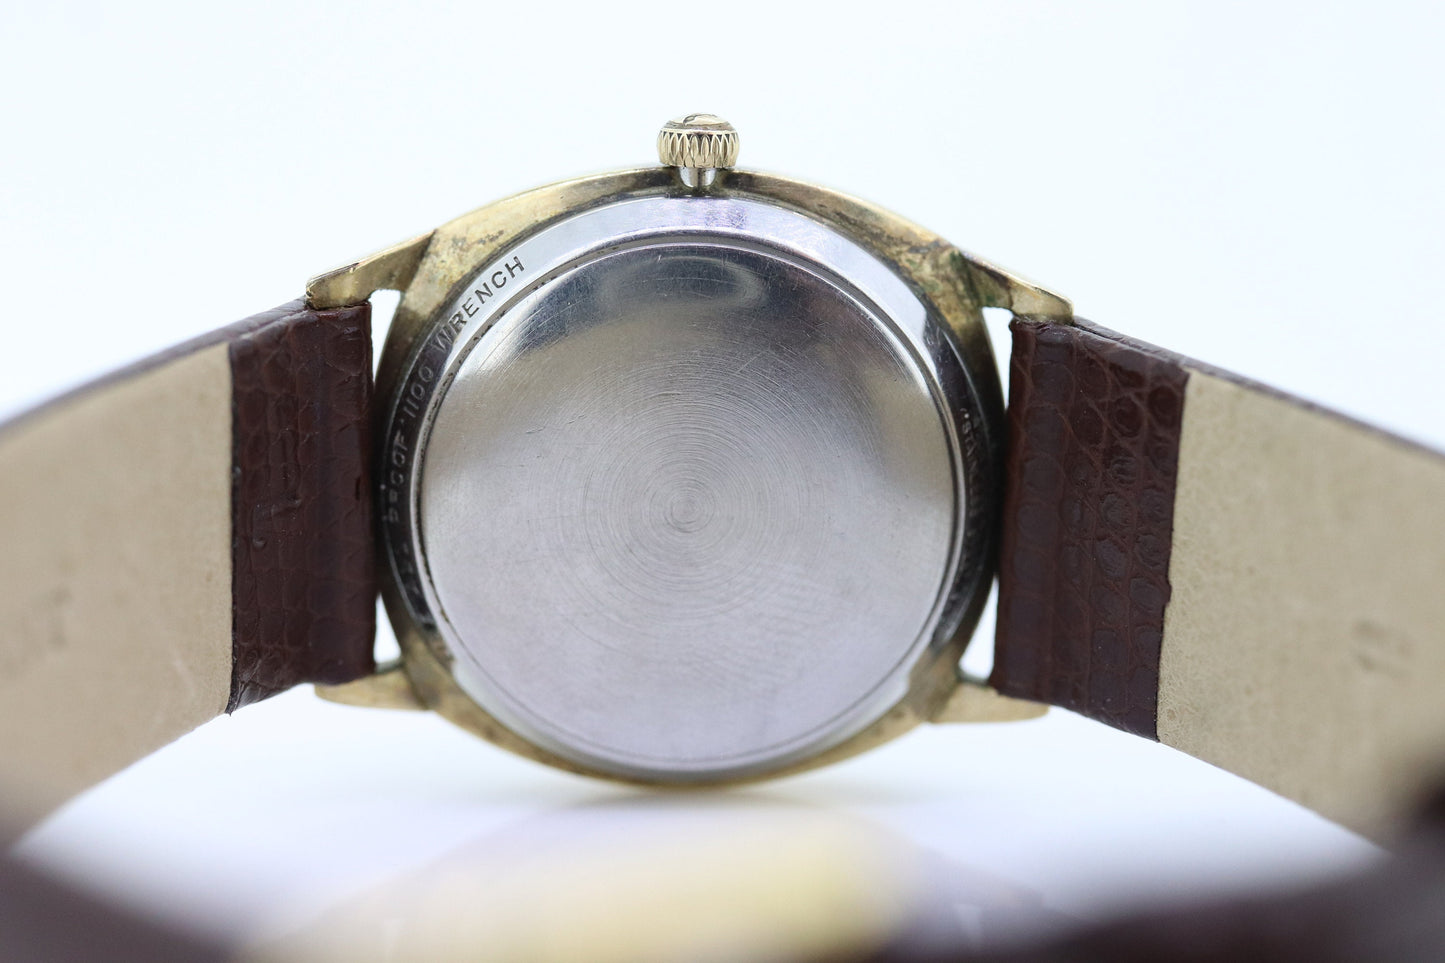 Vintage Wittnauer Mens Wristwatch. 1950s Round Wittnauer 10k Gold Filled Automatic. st(50)